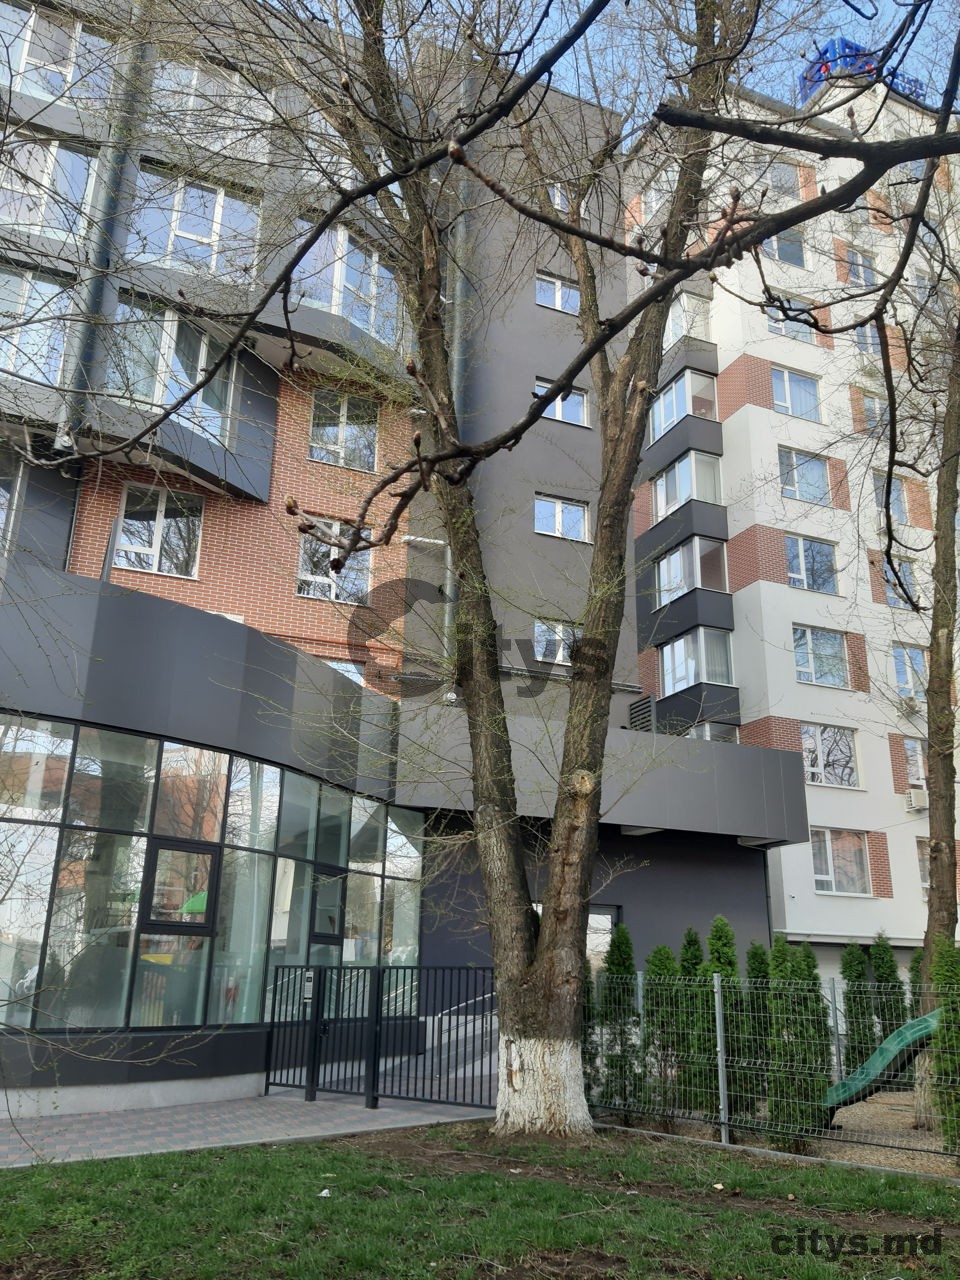 Chirie-Apartament cu 1 cameră, 40m², Chișinău, Botanica, str. Vorniceni photo 0